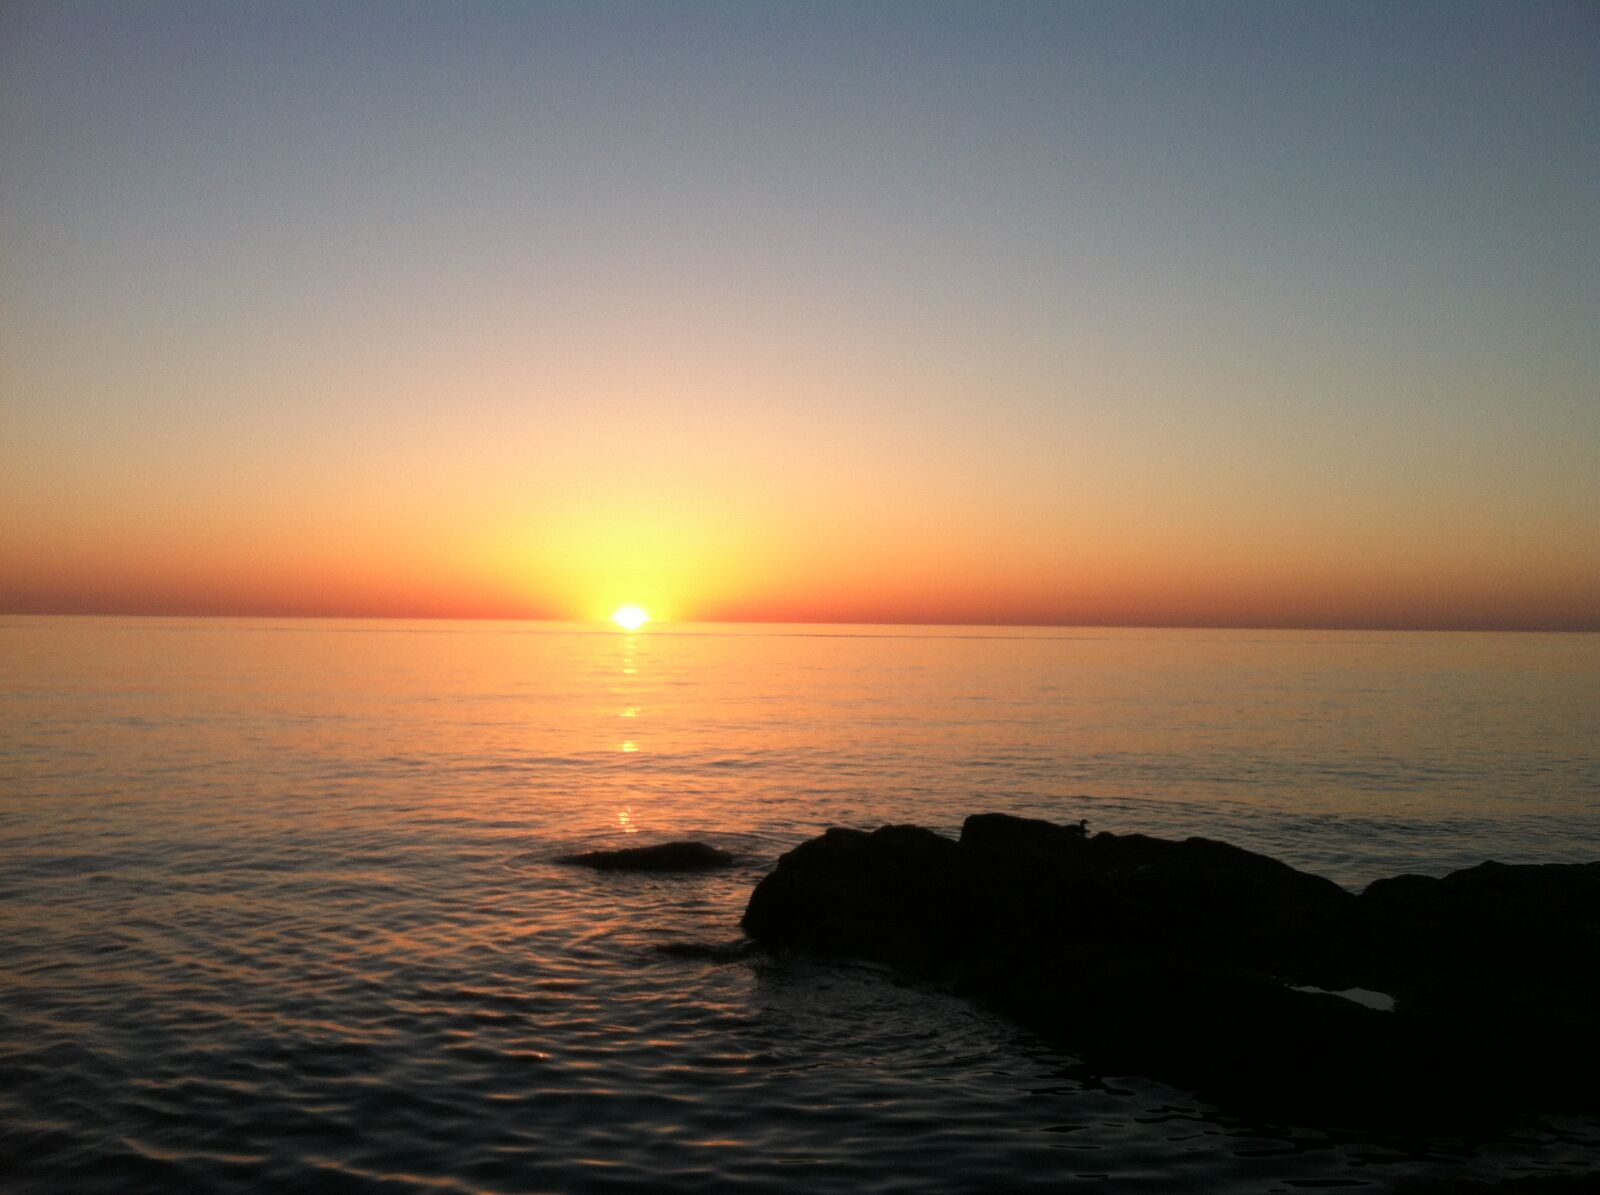 iPhone 4 back camera 3.85mm f/2.8 sample photo. Ocean, serenity, sunrise photography